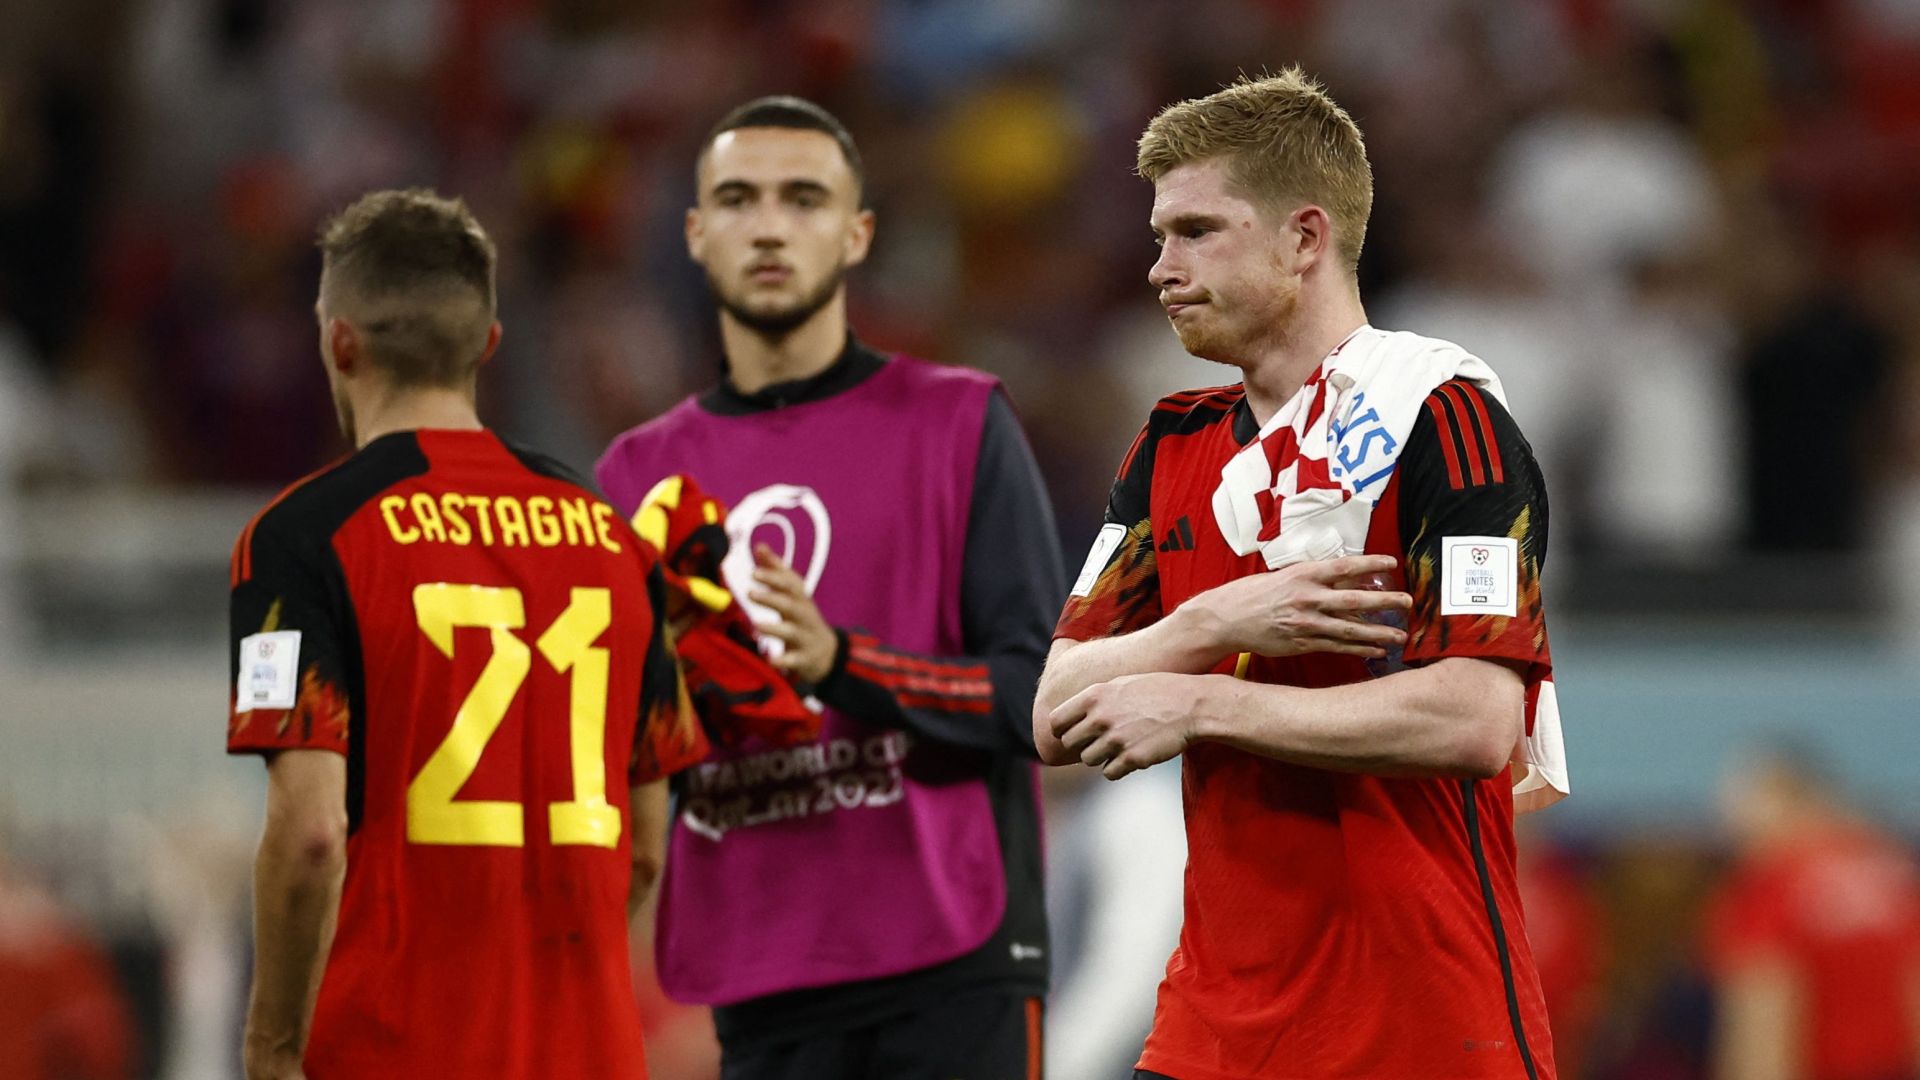 Bélgica quedó eliminado del Mundial Qatar 2022: Croacia pasó a octavos de final con empate. REUTERS/Stephane Mahe